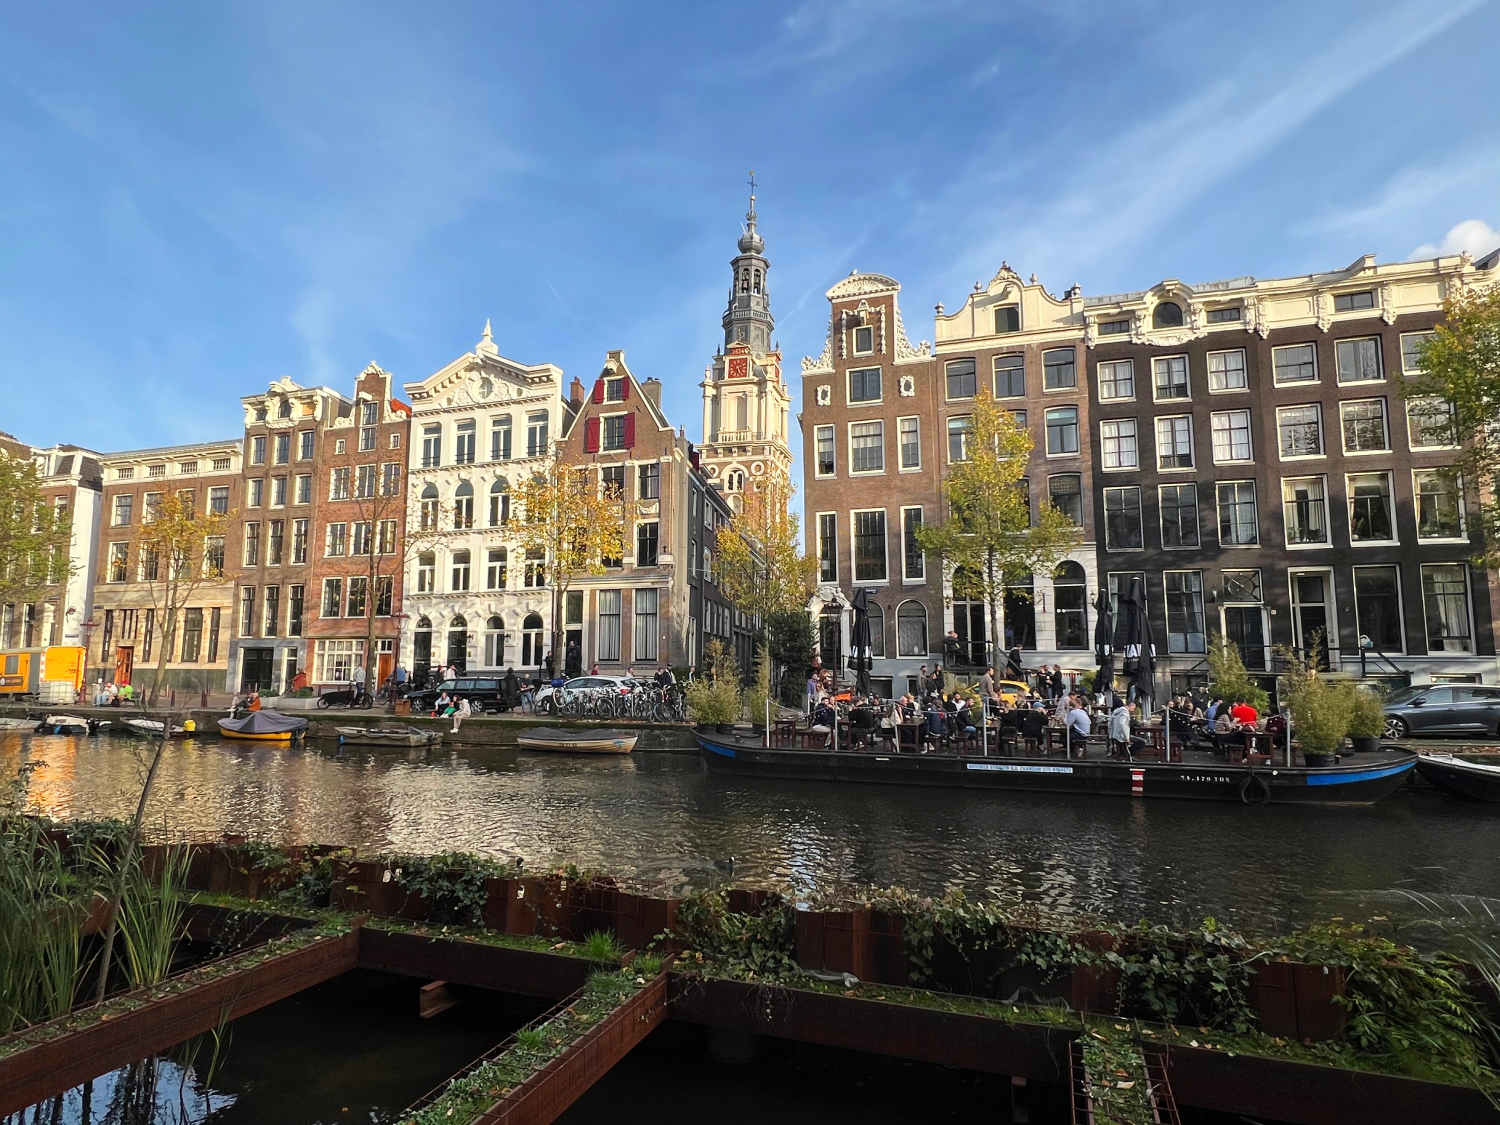 Kloveniersburgwal Canal, Amsterdam